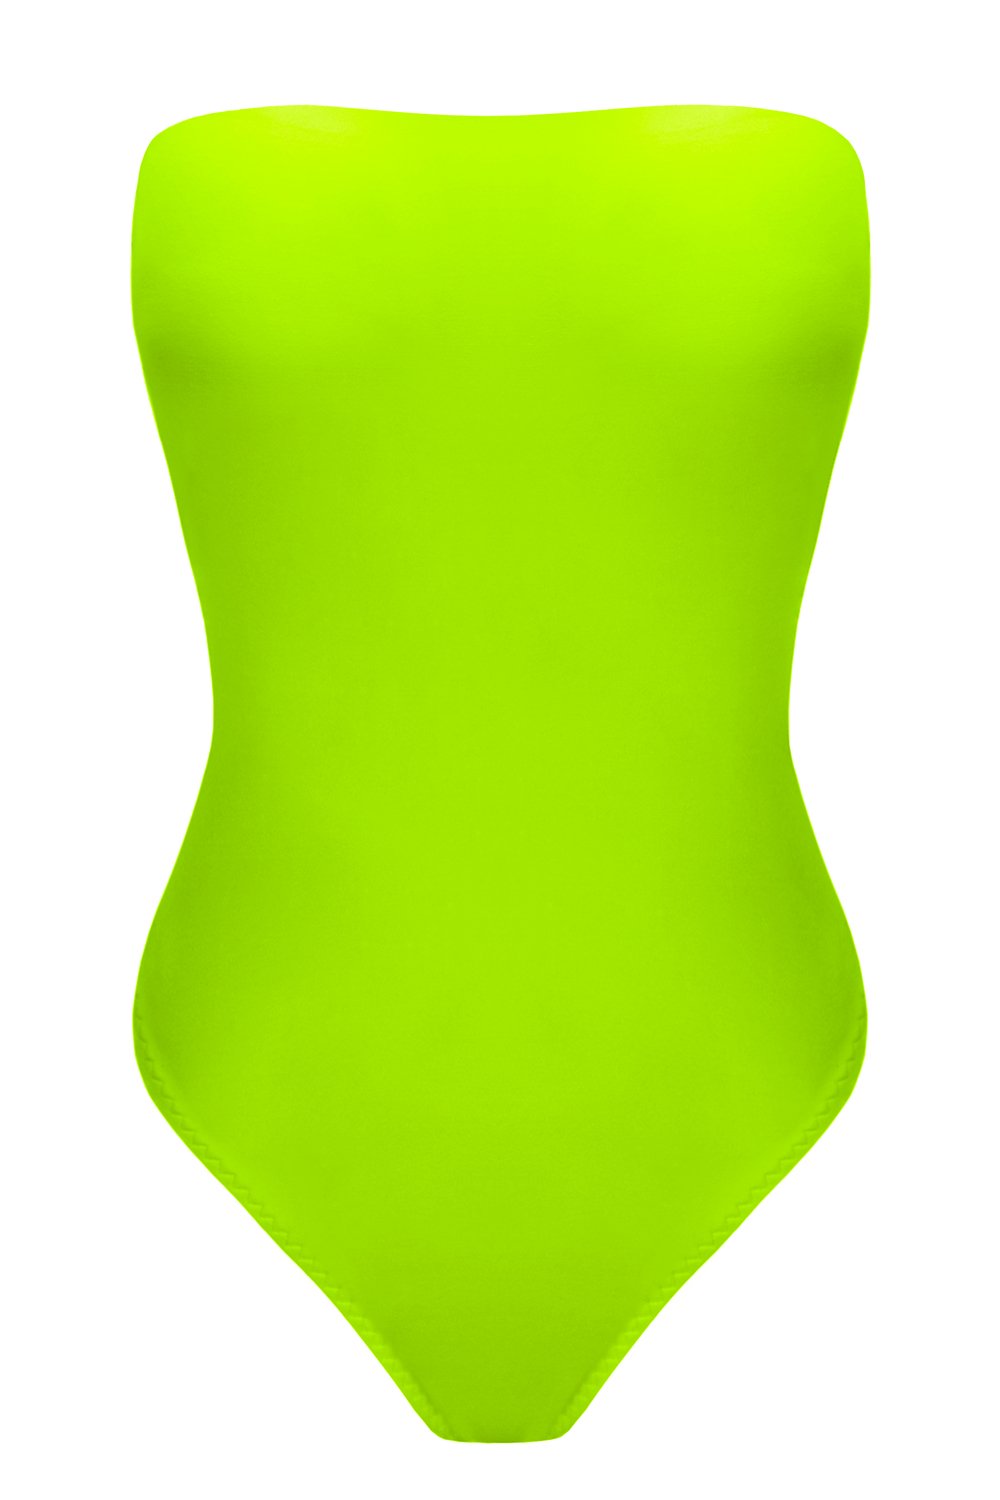 Ellipsia Greenery swimsuit